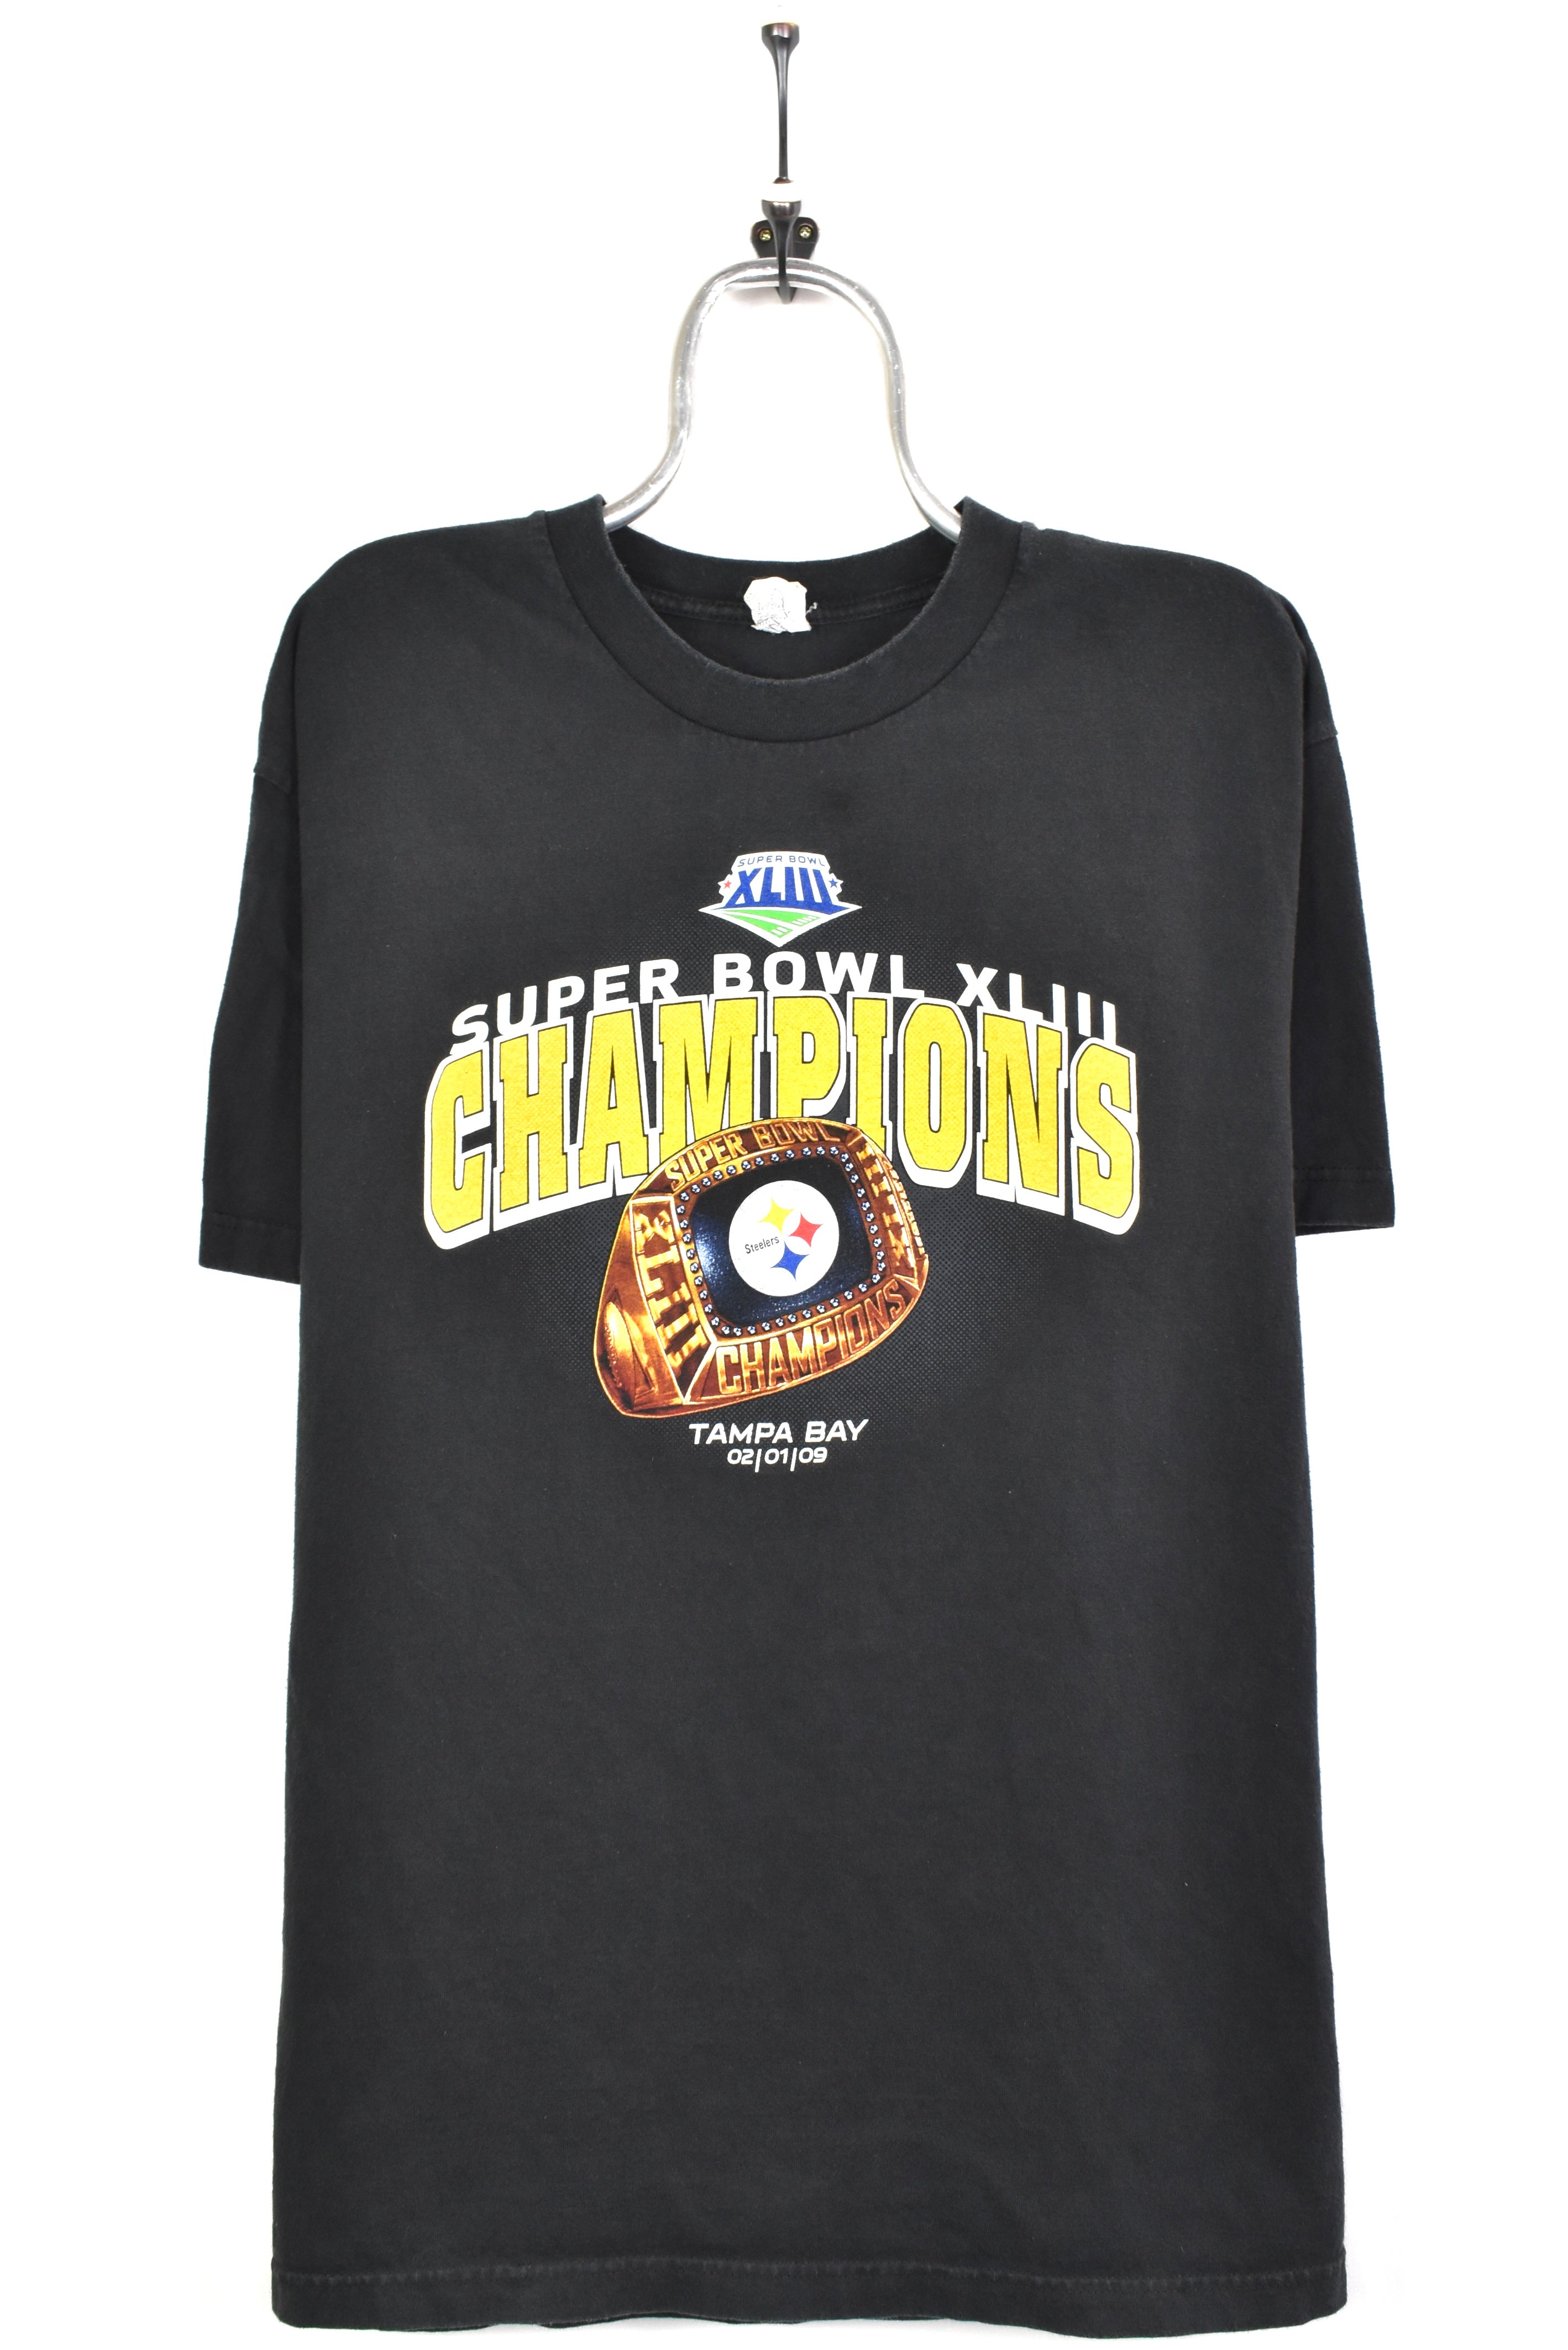 Modern Pittsburgh Steelers shirt, NFL 2009 Super Bowl graphic tee - large, black PRO SPORT